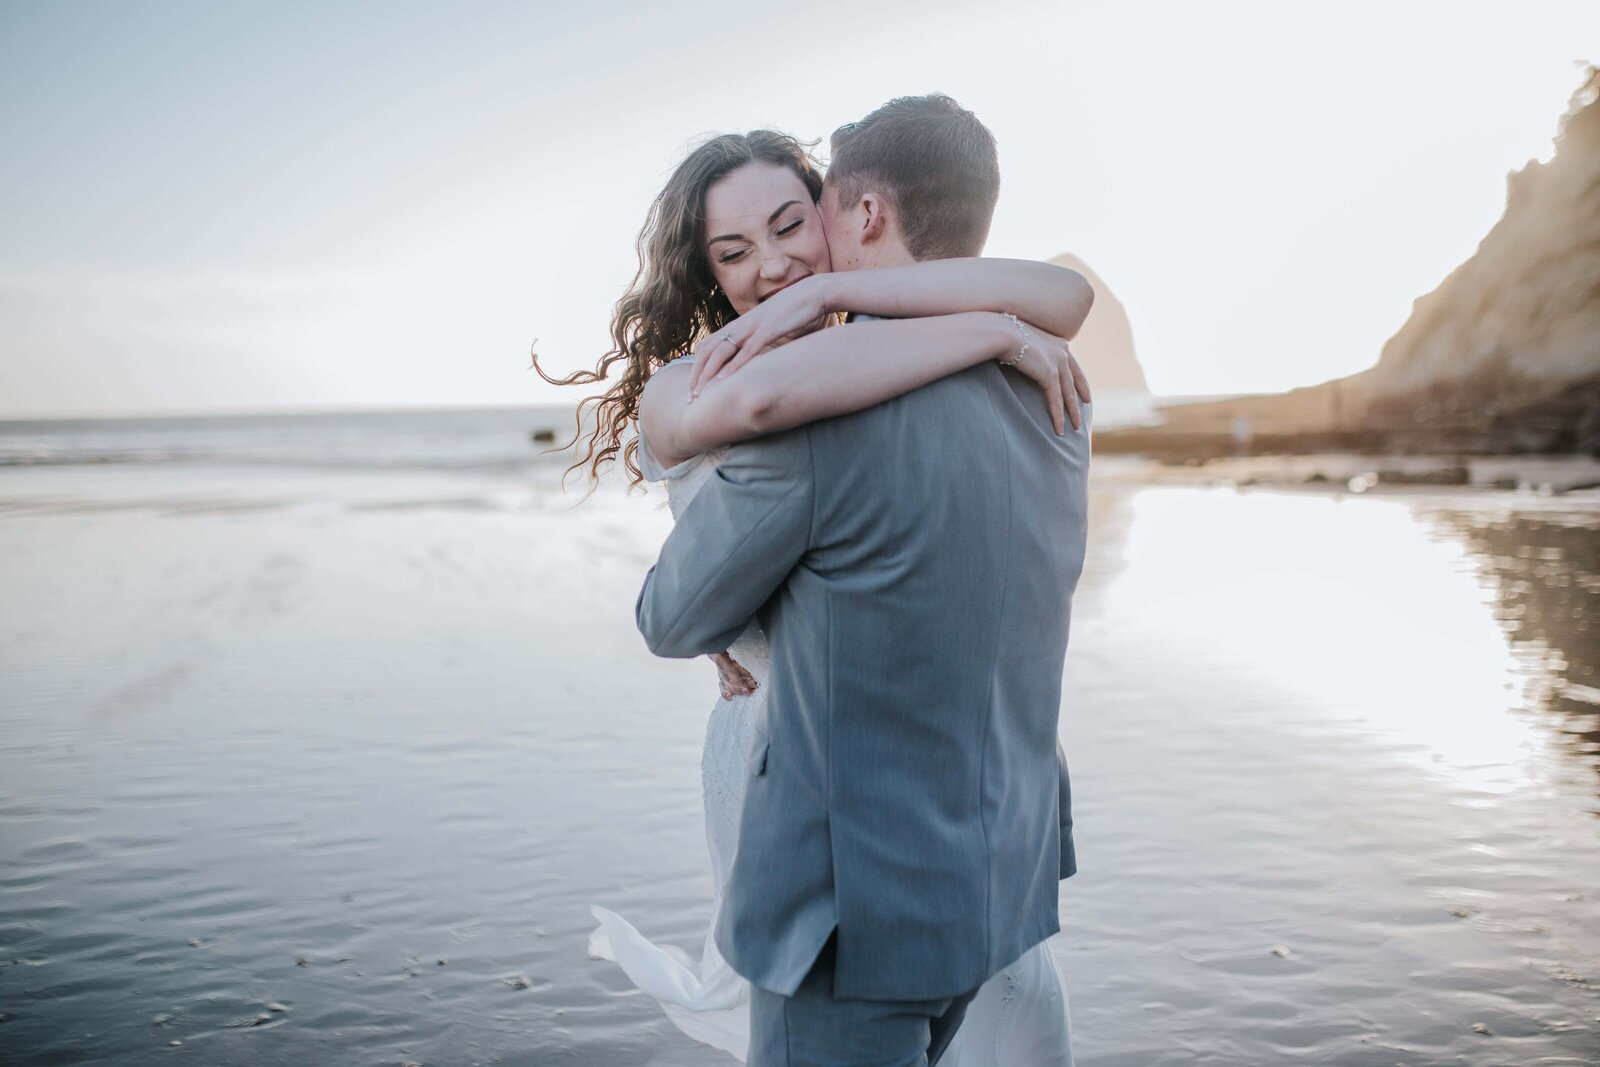 Lake Tahoe wedding photographer captures couple hugging on beach at sunset